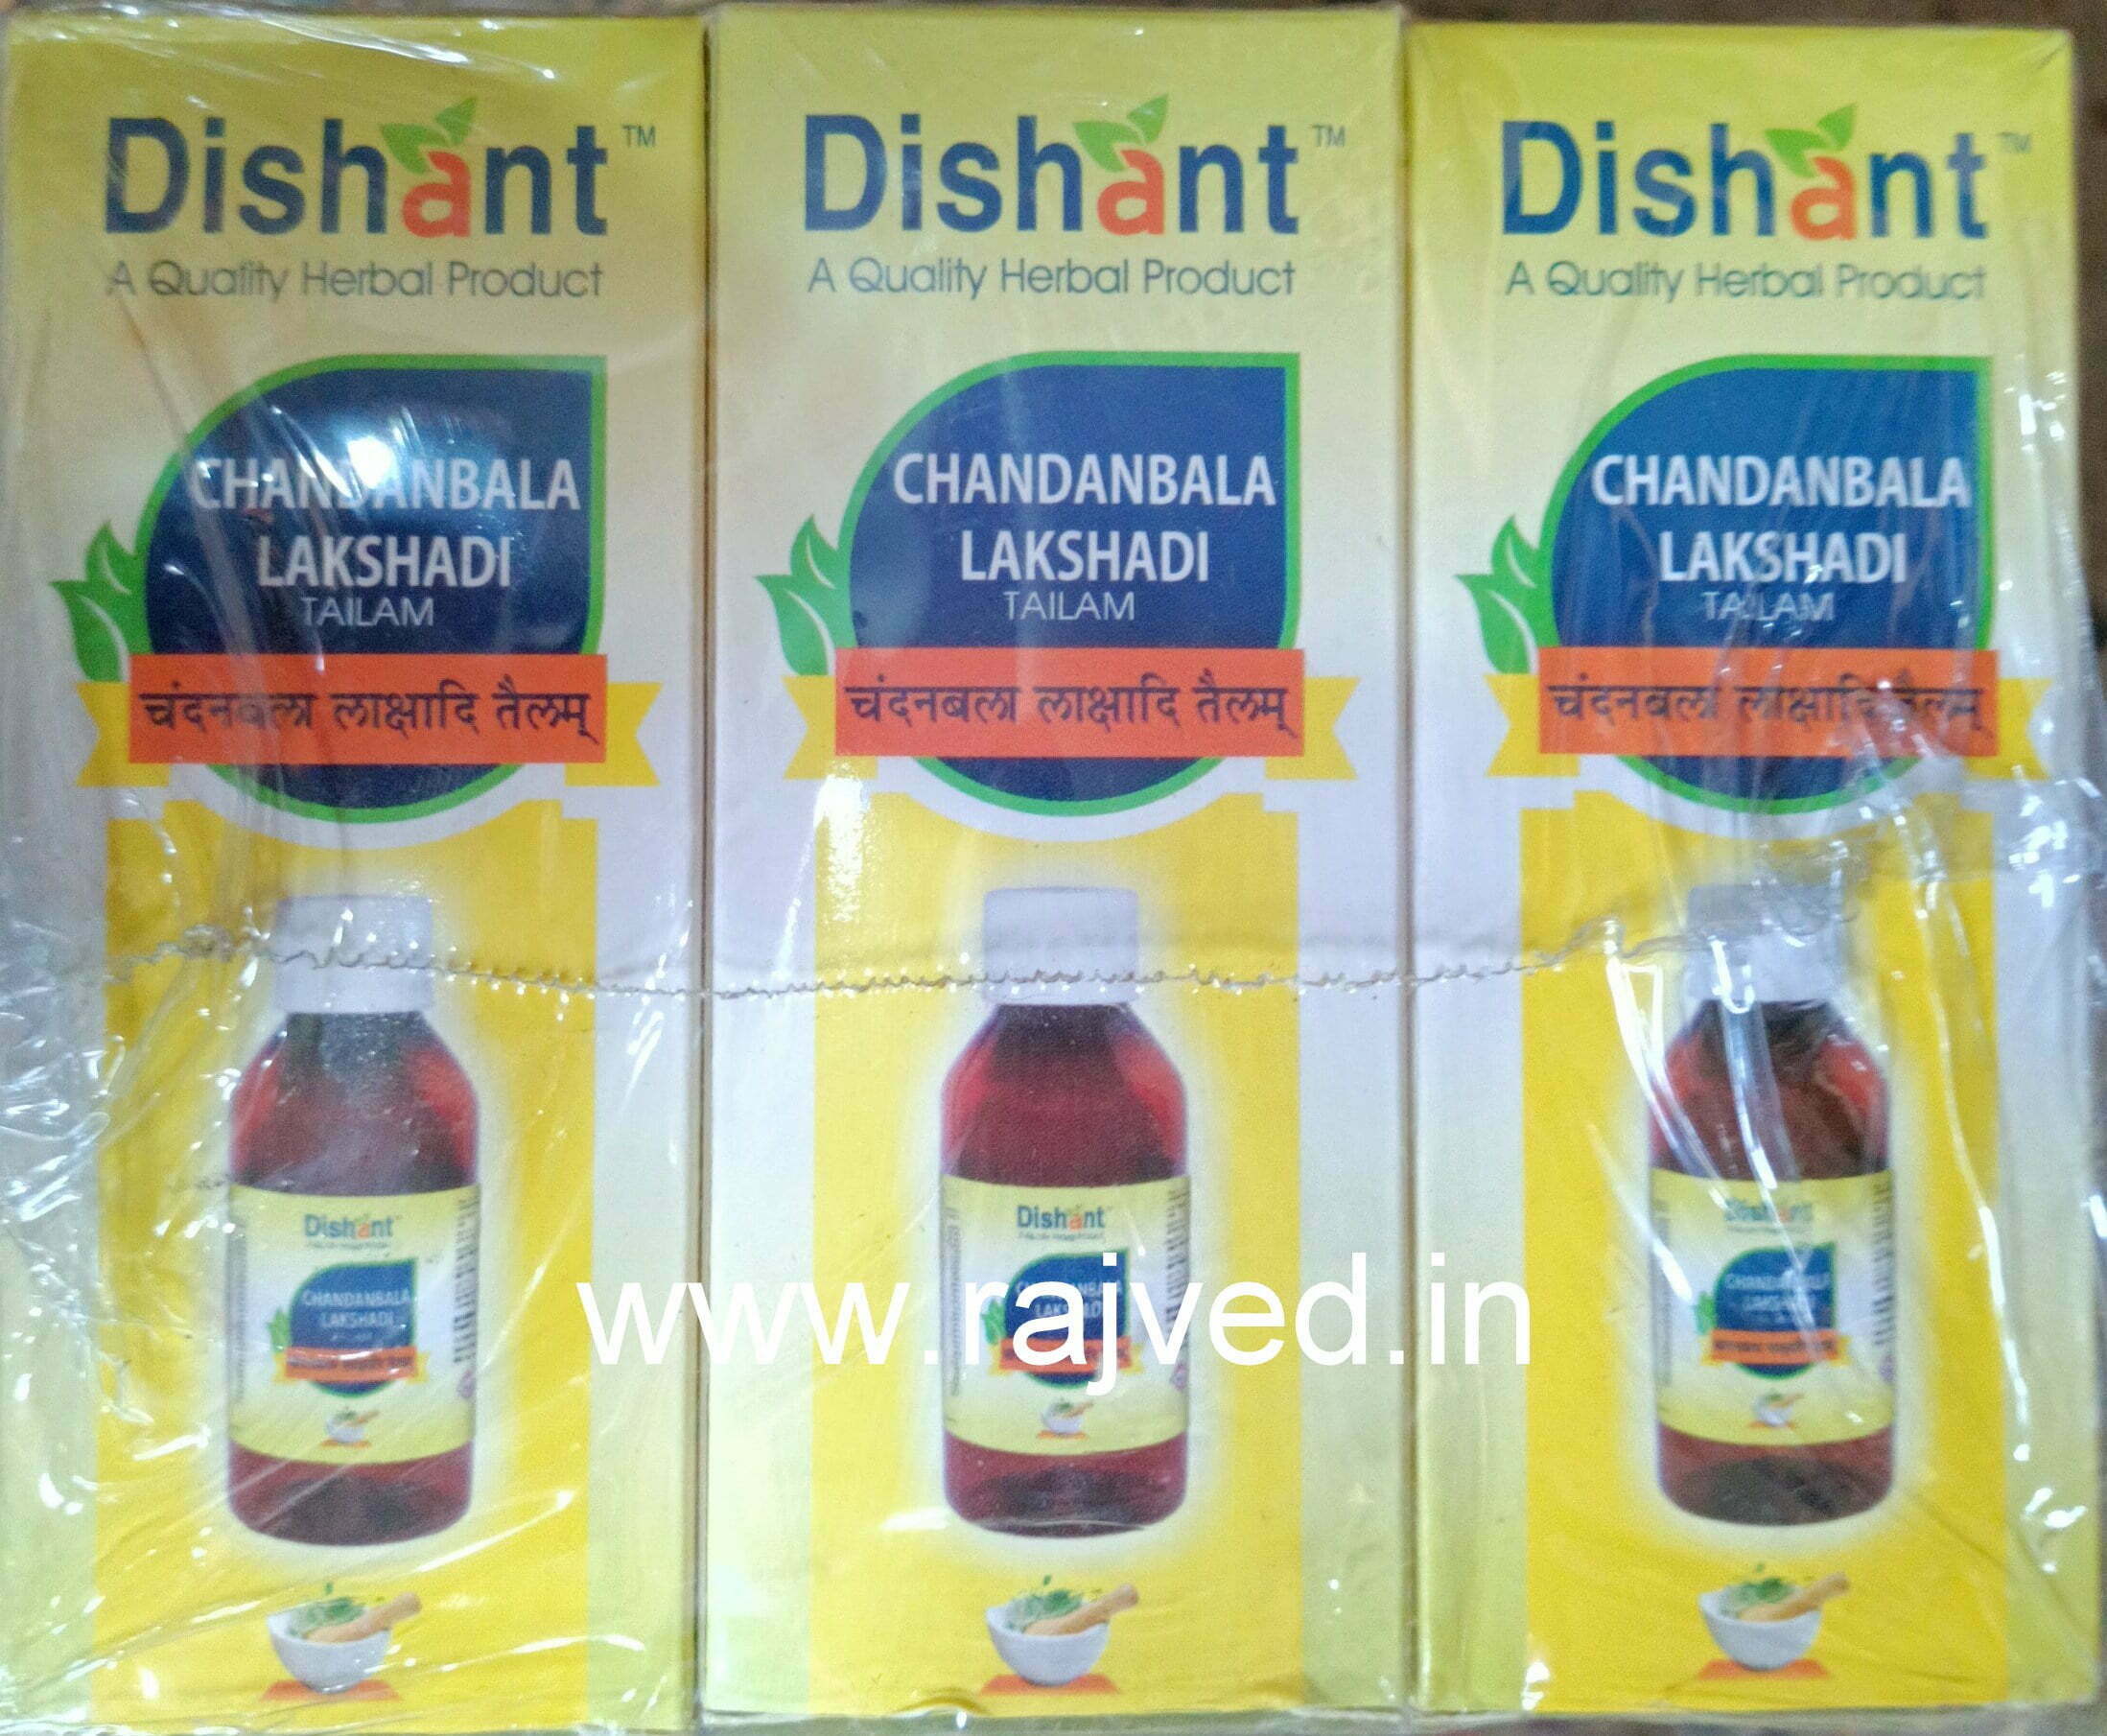 chandanbala lakshadi tailam 200 ml dishant ayurvedic suppliers